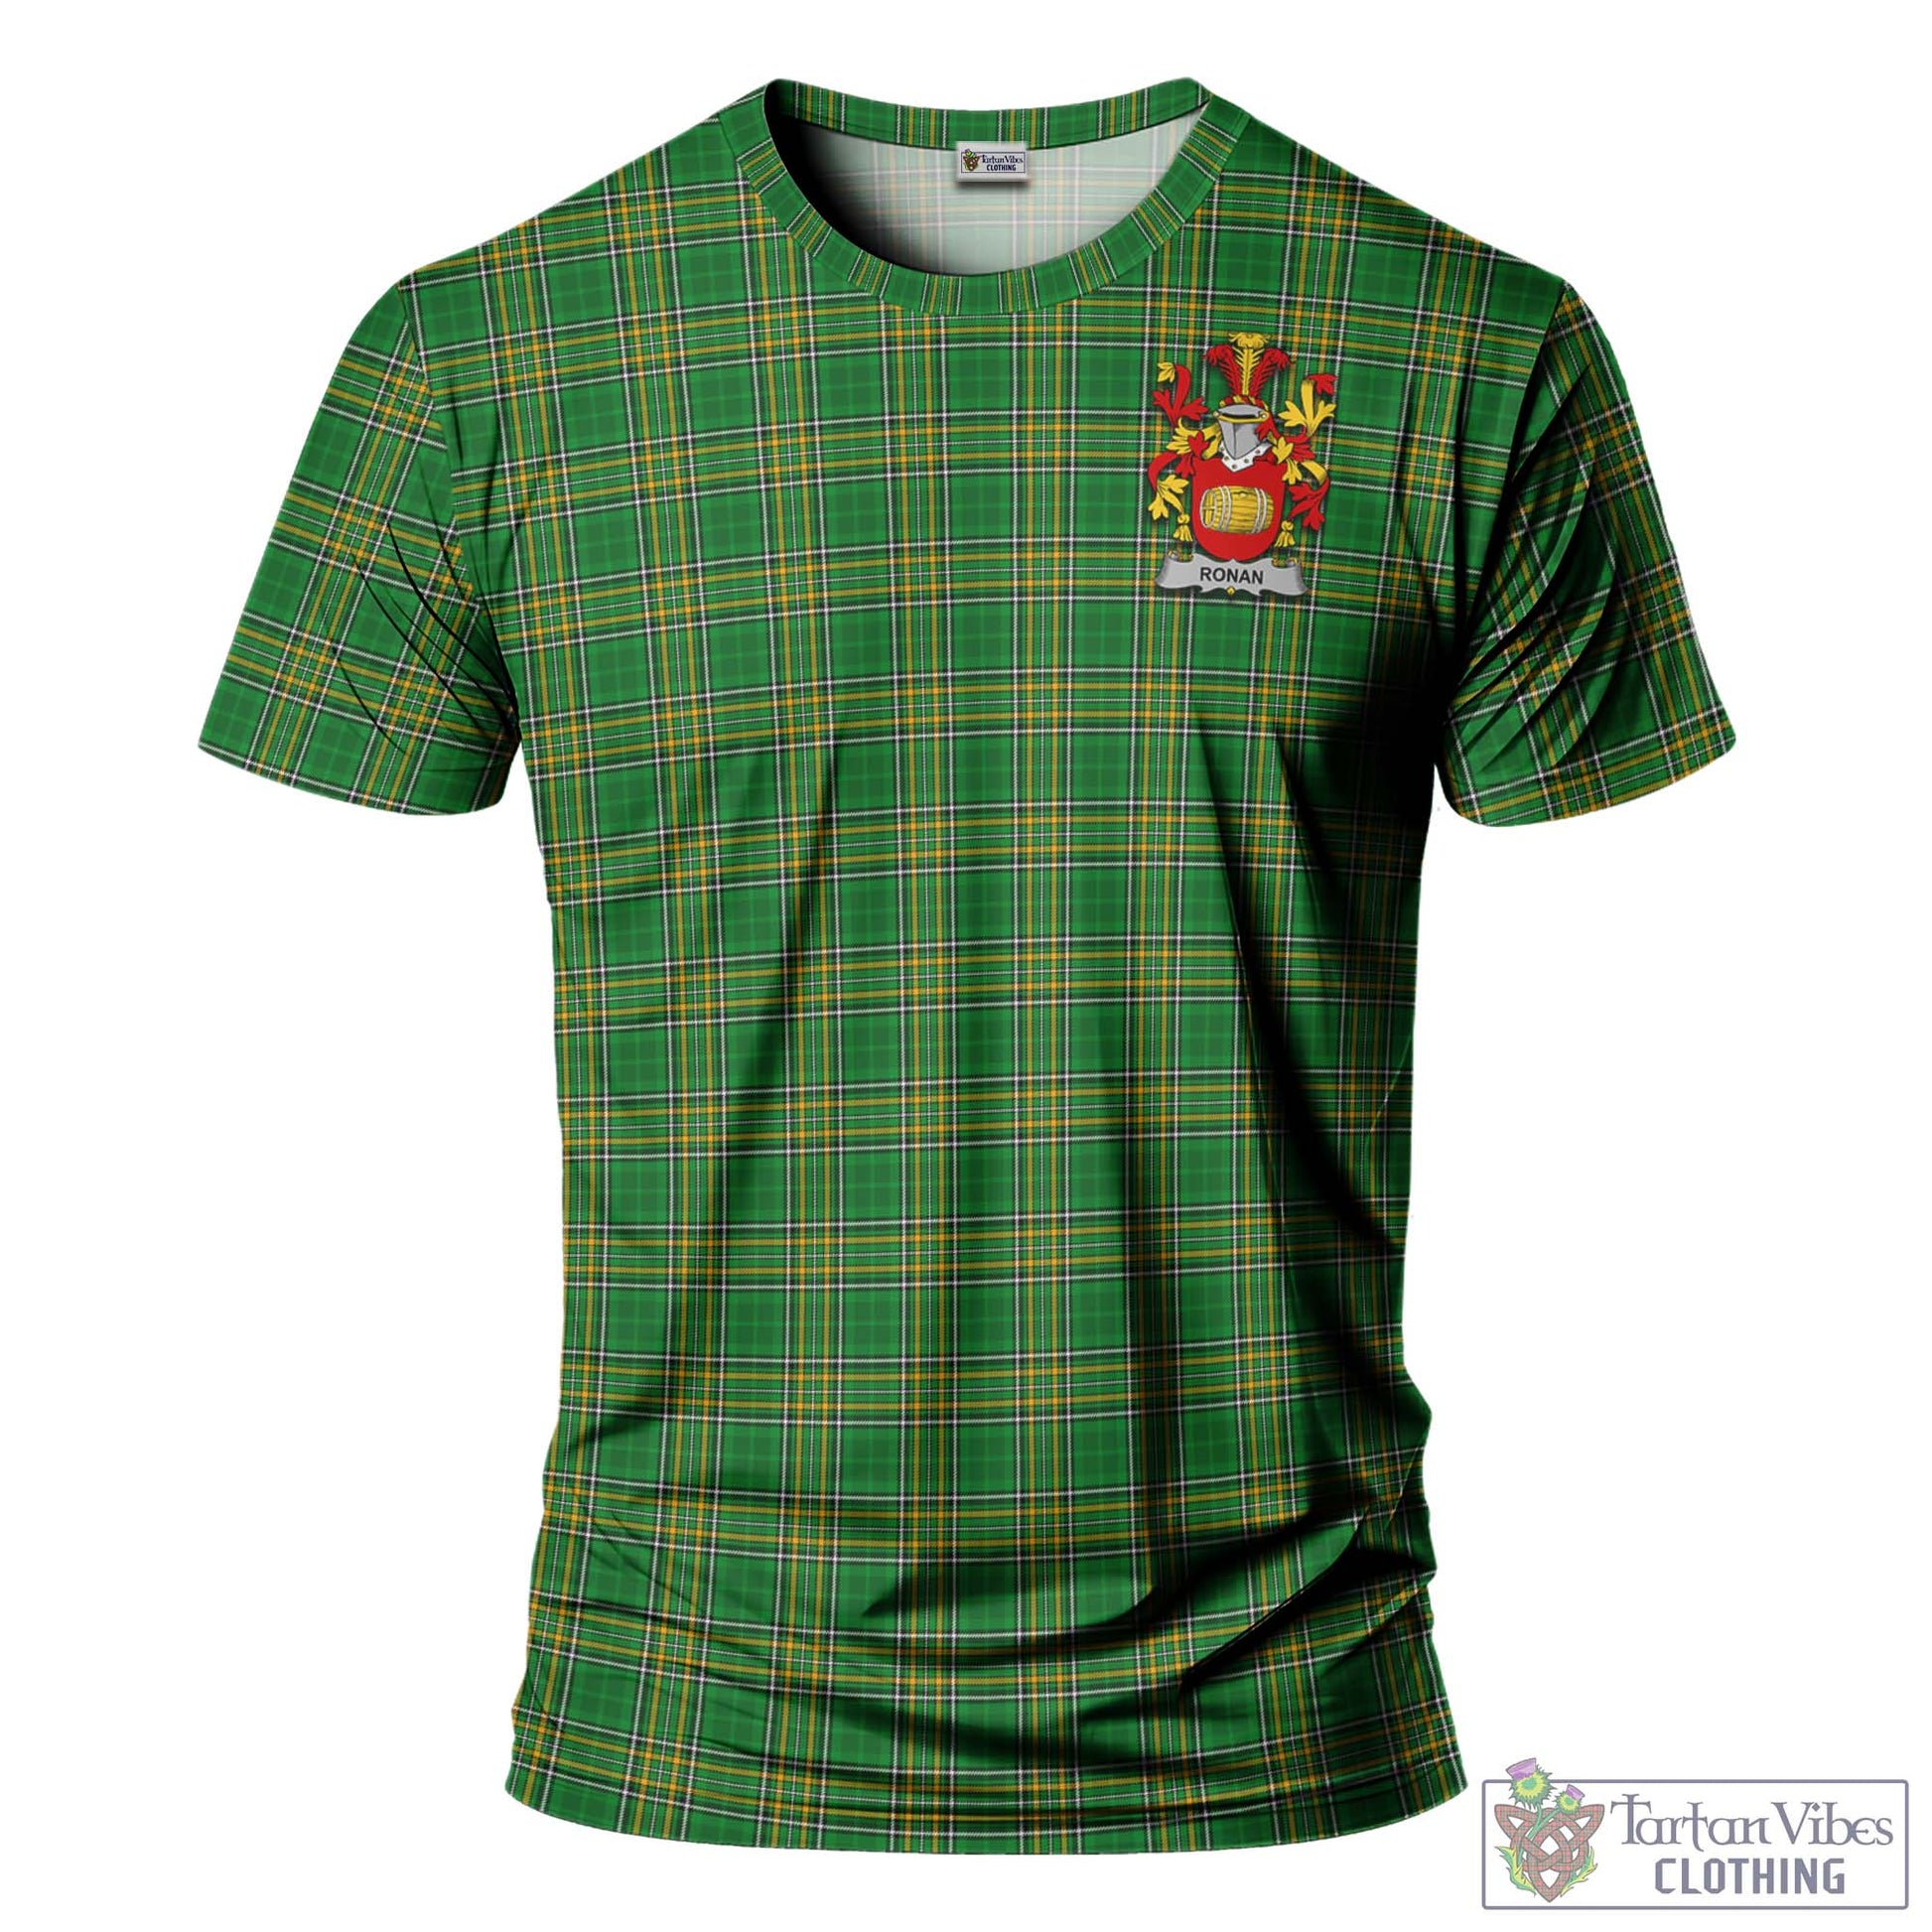 Tartan Vibes Clothing Ronan Ireland Clan Tartan T-Shirt with Family Seal